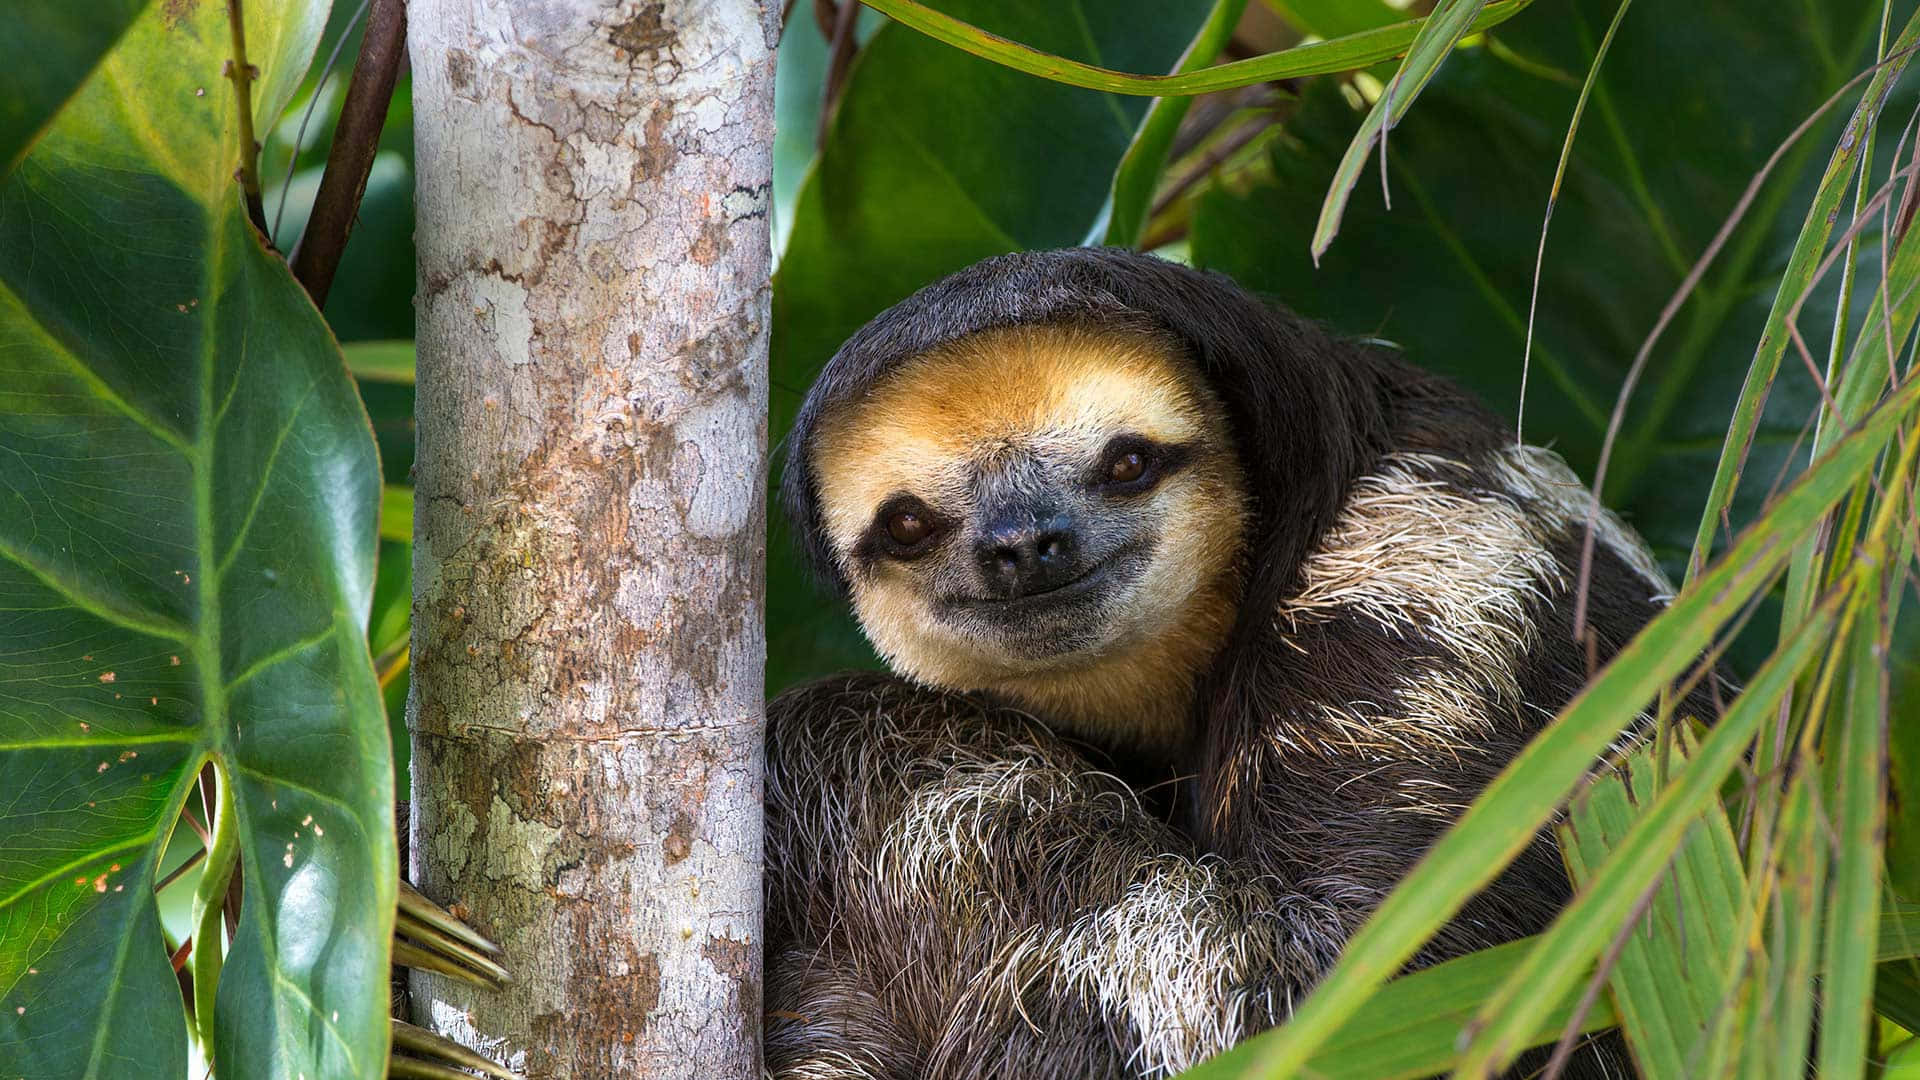 A sleepy sloth taking afternoon nap